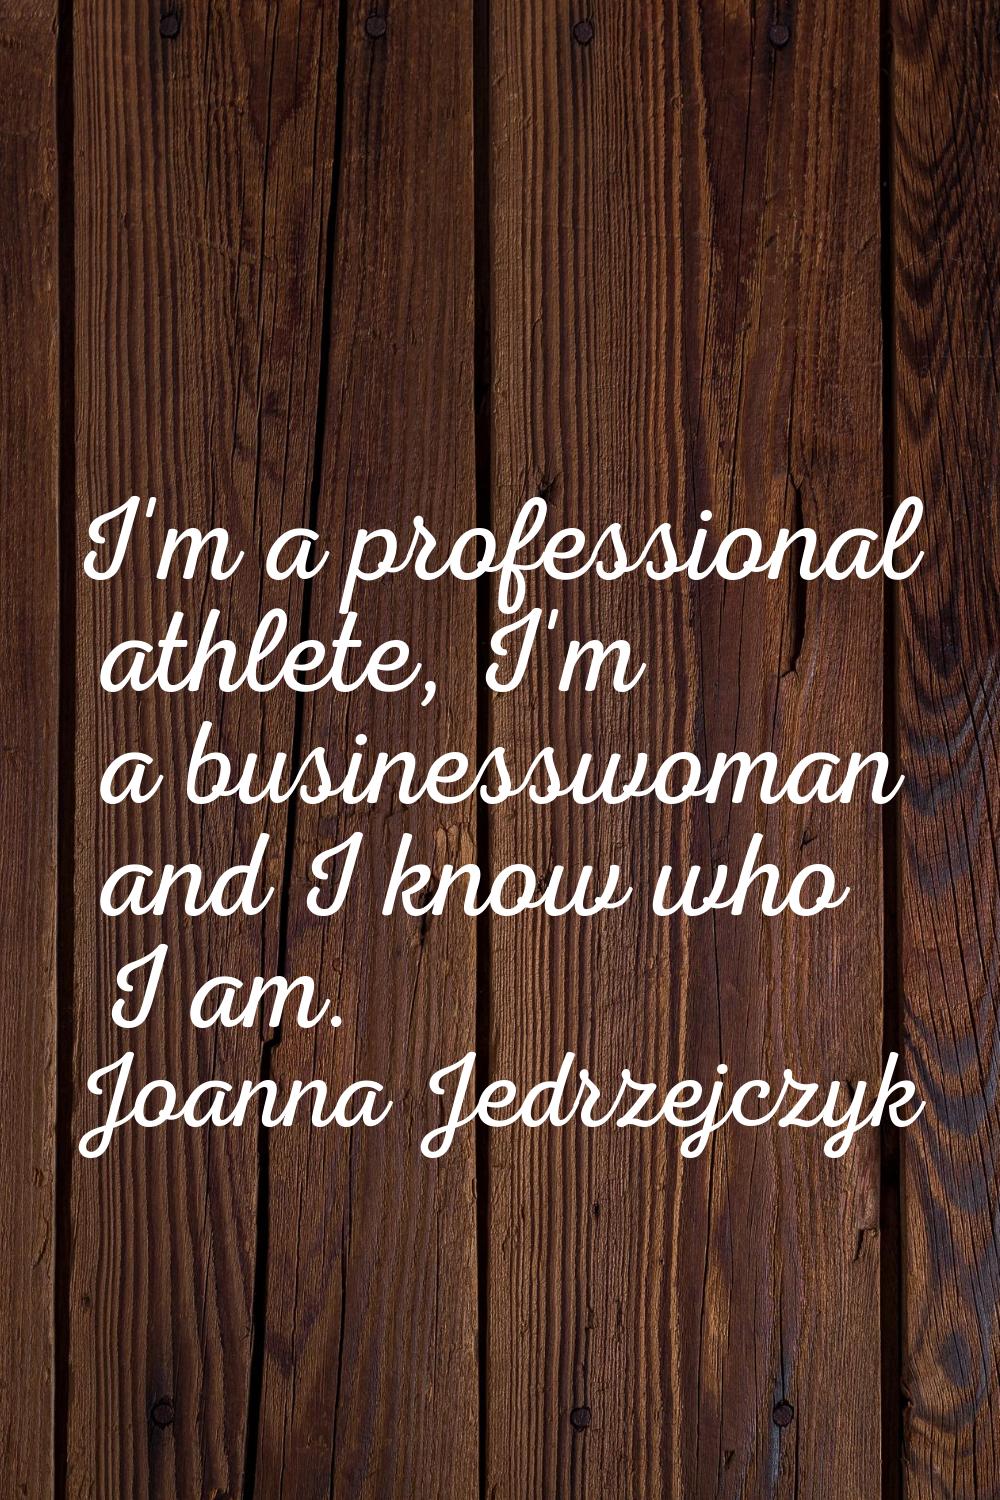 I'm a professional athlete, I'm a businesswoman and I know who I am.